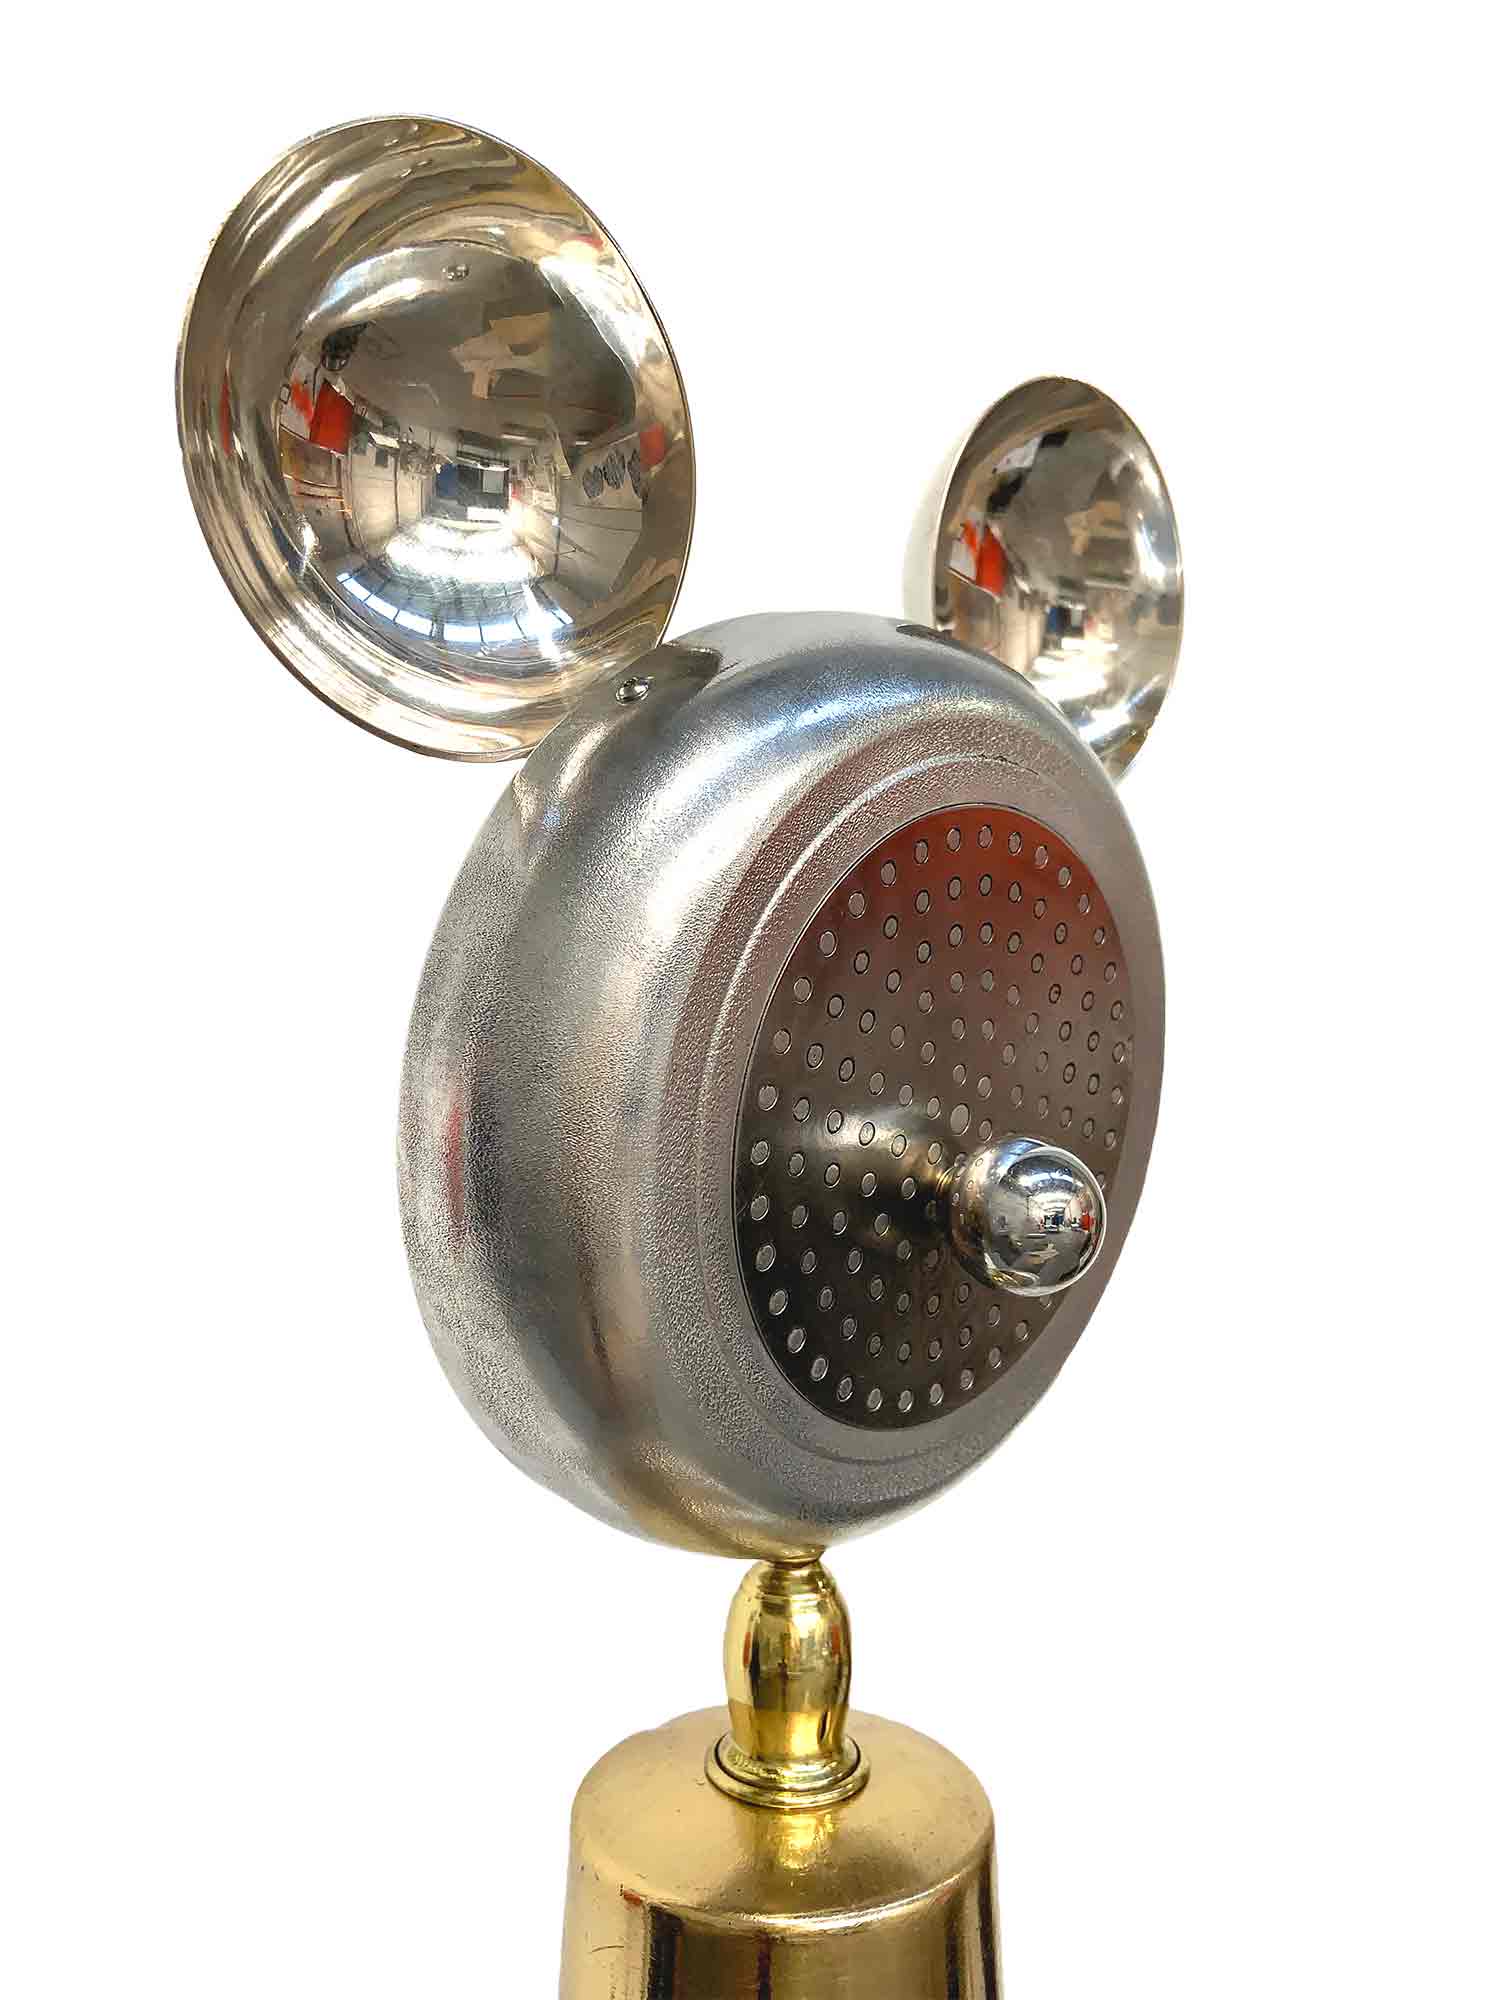 Dancing Minnie mouse sculpture